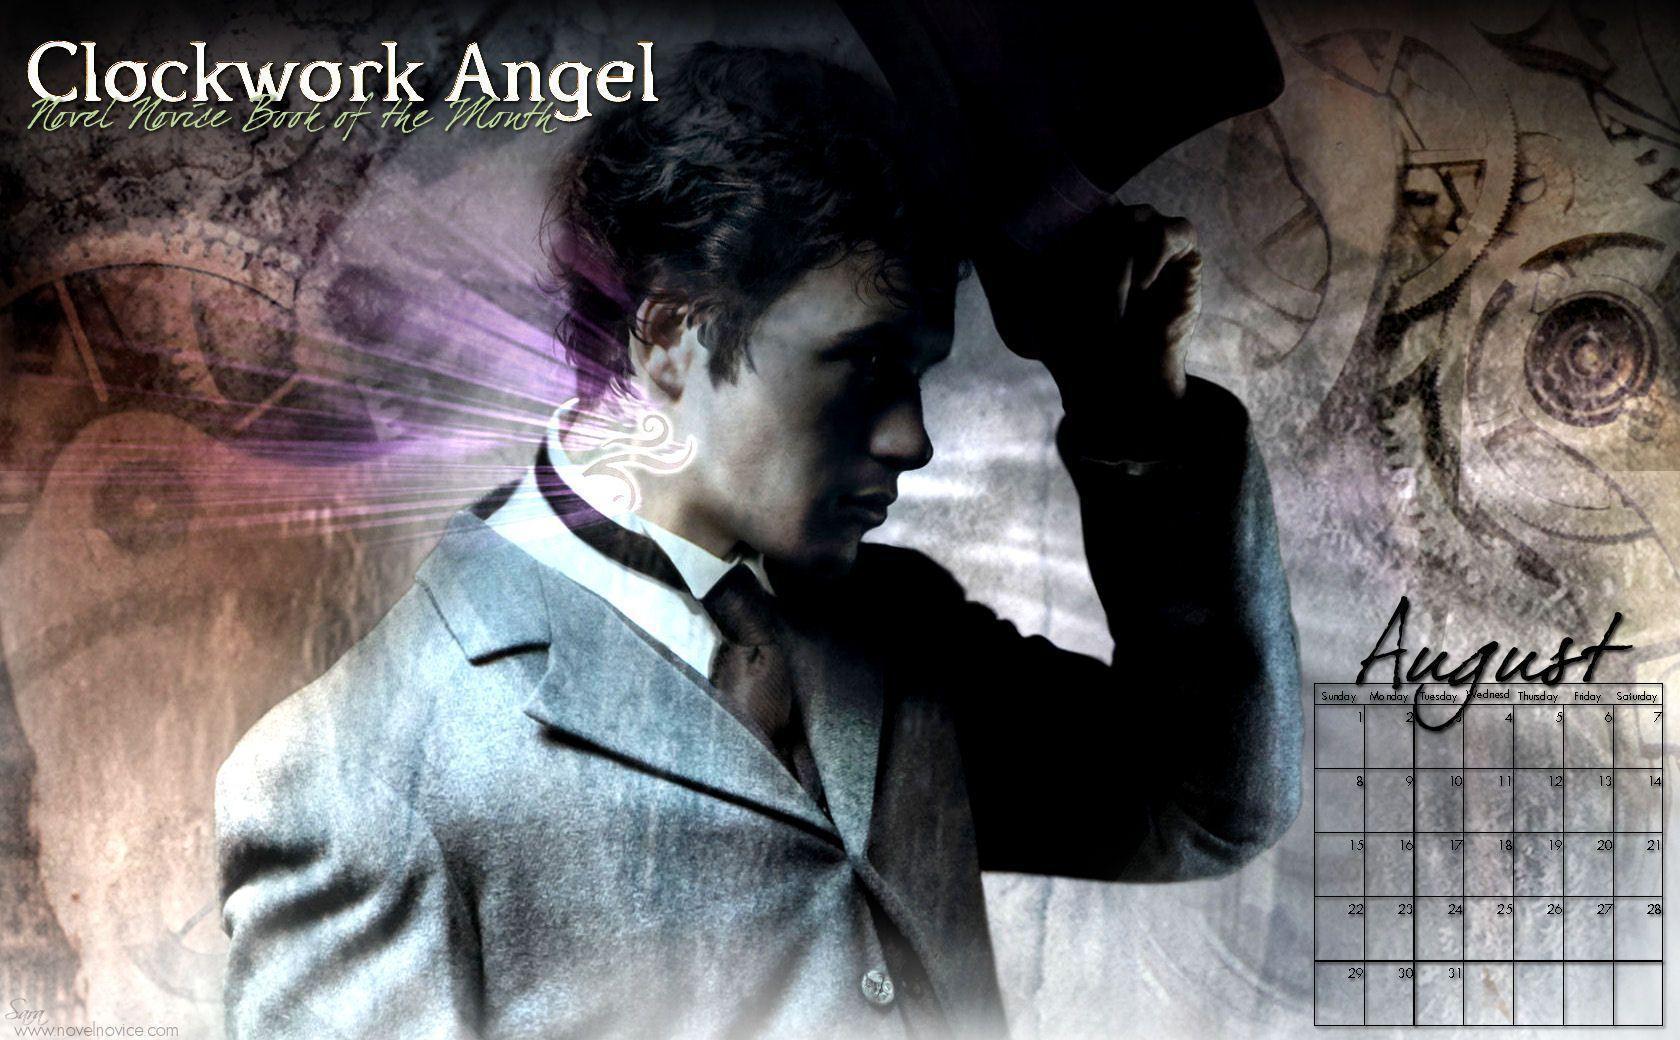 Introducing Clockwork Angel & The Mortal Instruments